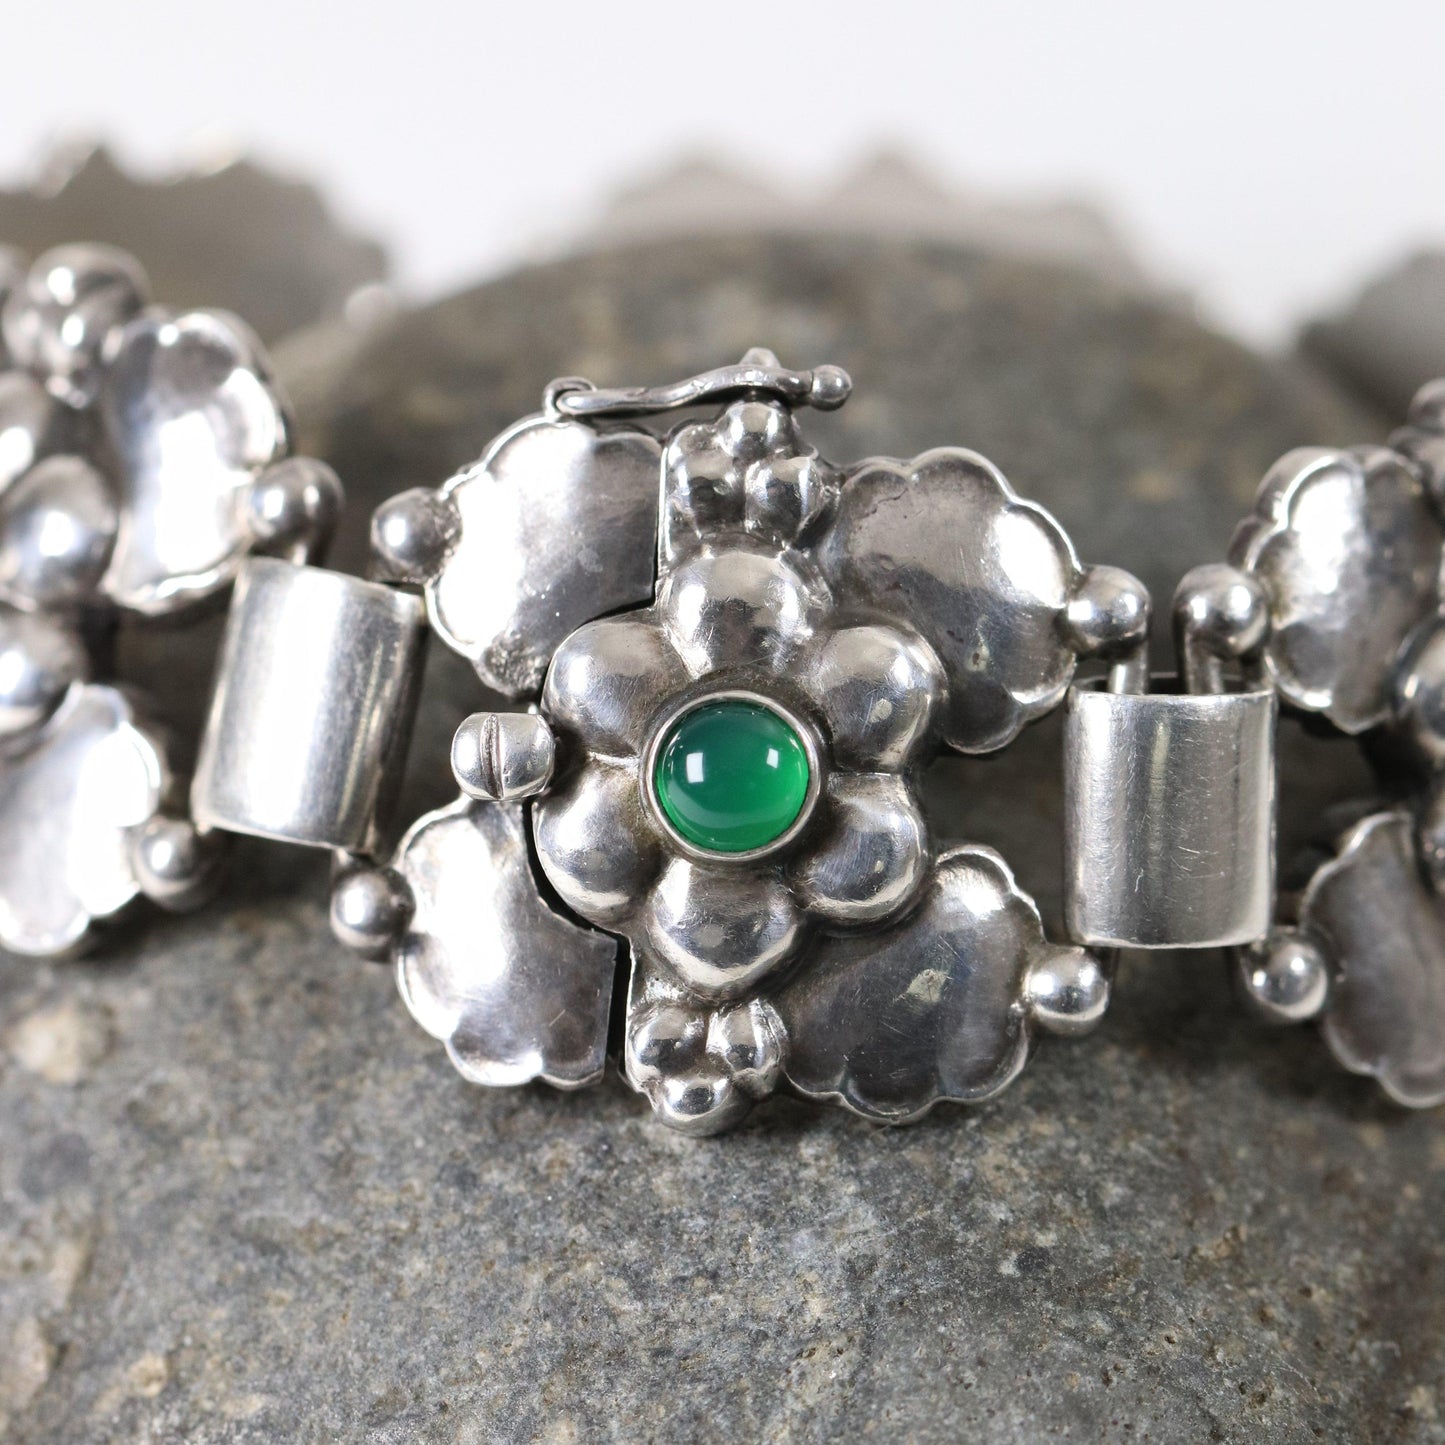 Vintage Georg Jensen Jewelry | Rare Art Nouveau Chrysoprase Floral Bracelet 61 Denmark - Carmel Fine Silver Jewelry